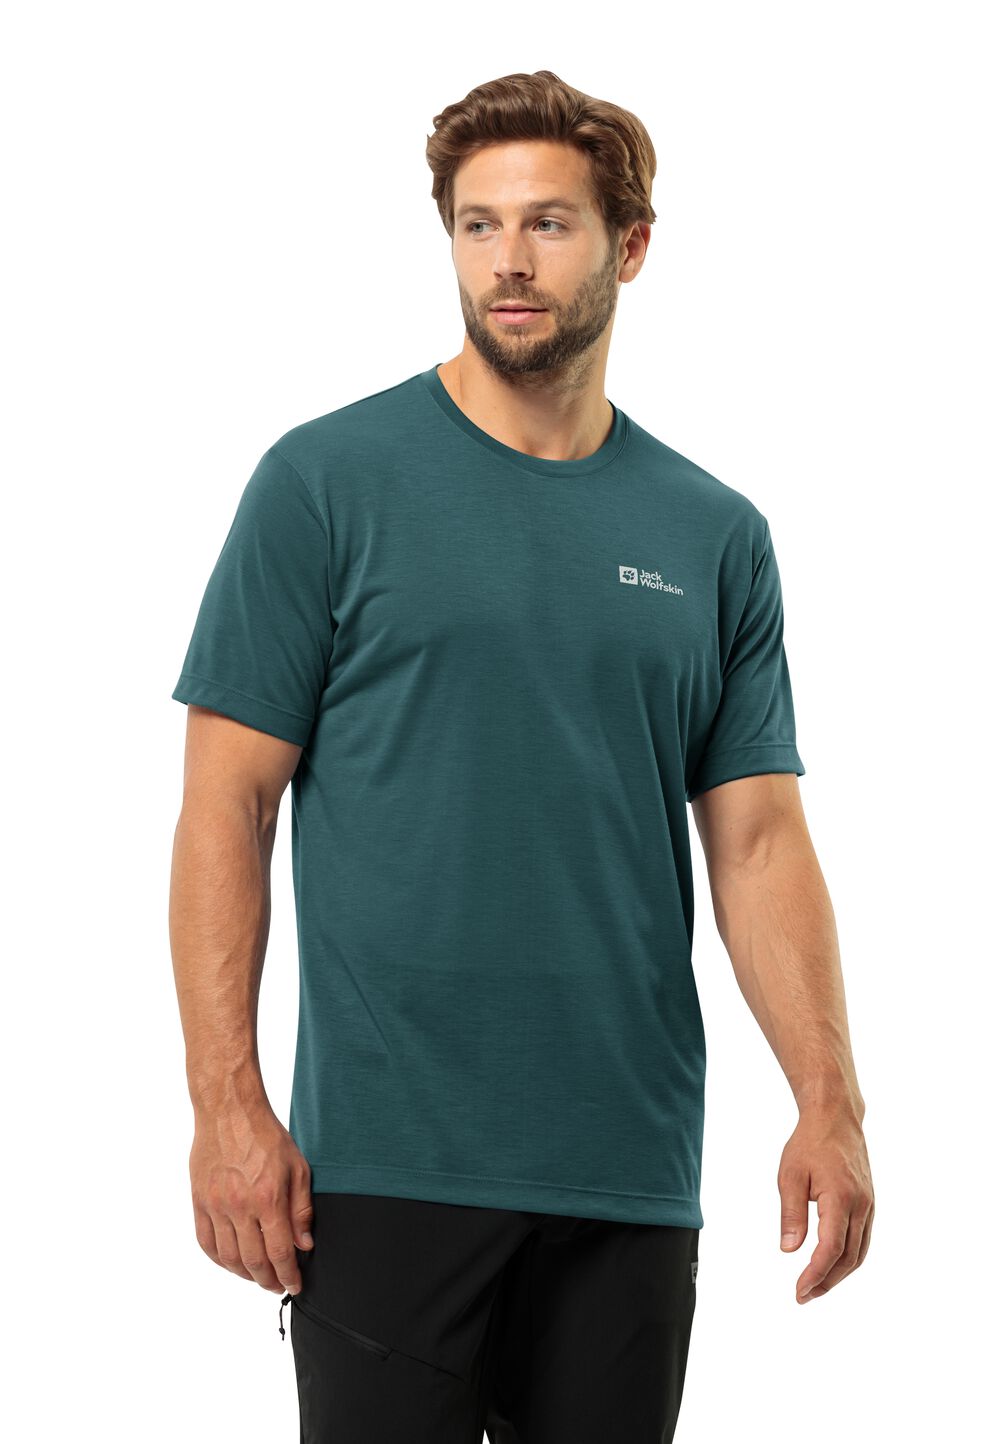 Jack Wolfskin Vonnan S S T-Shirt Men Functioneel shirt Heren XXL emerald